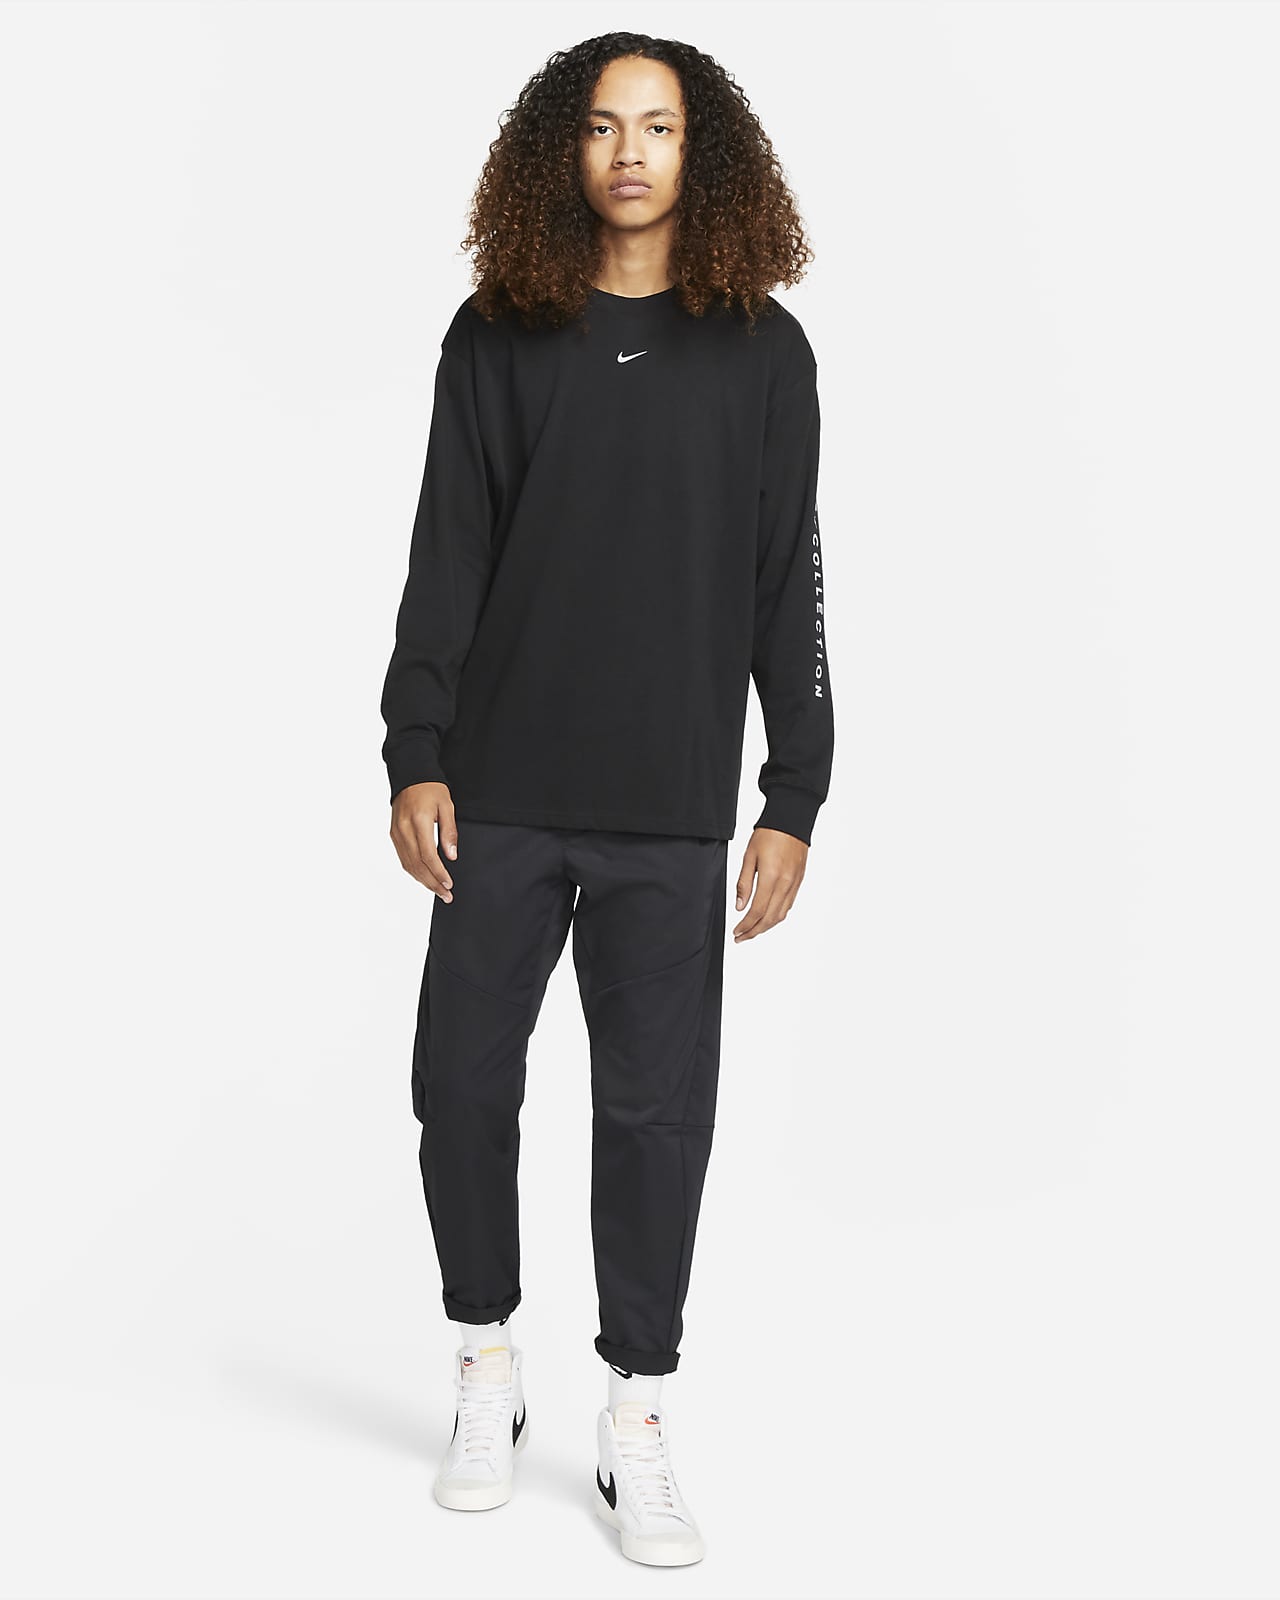 Naomi Osaka Long-Sleeve T-Shirt. Nike NZ